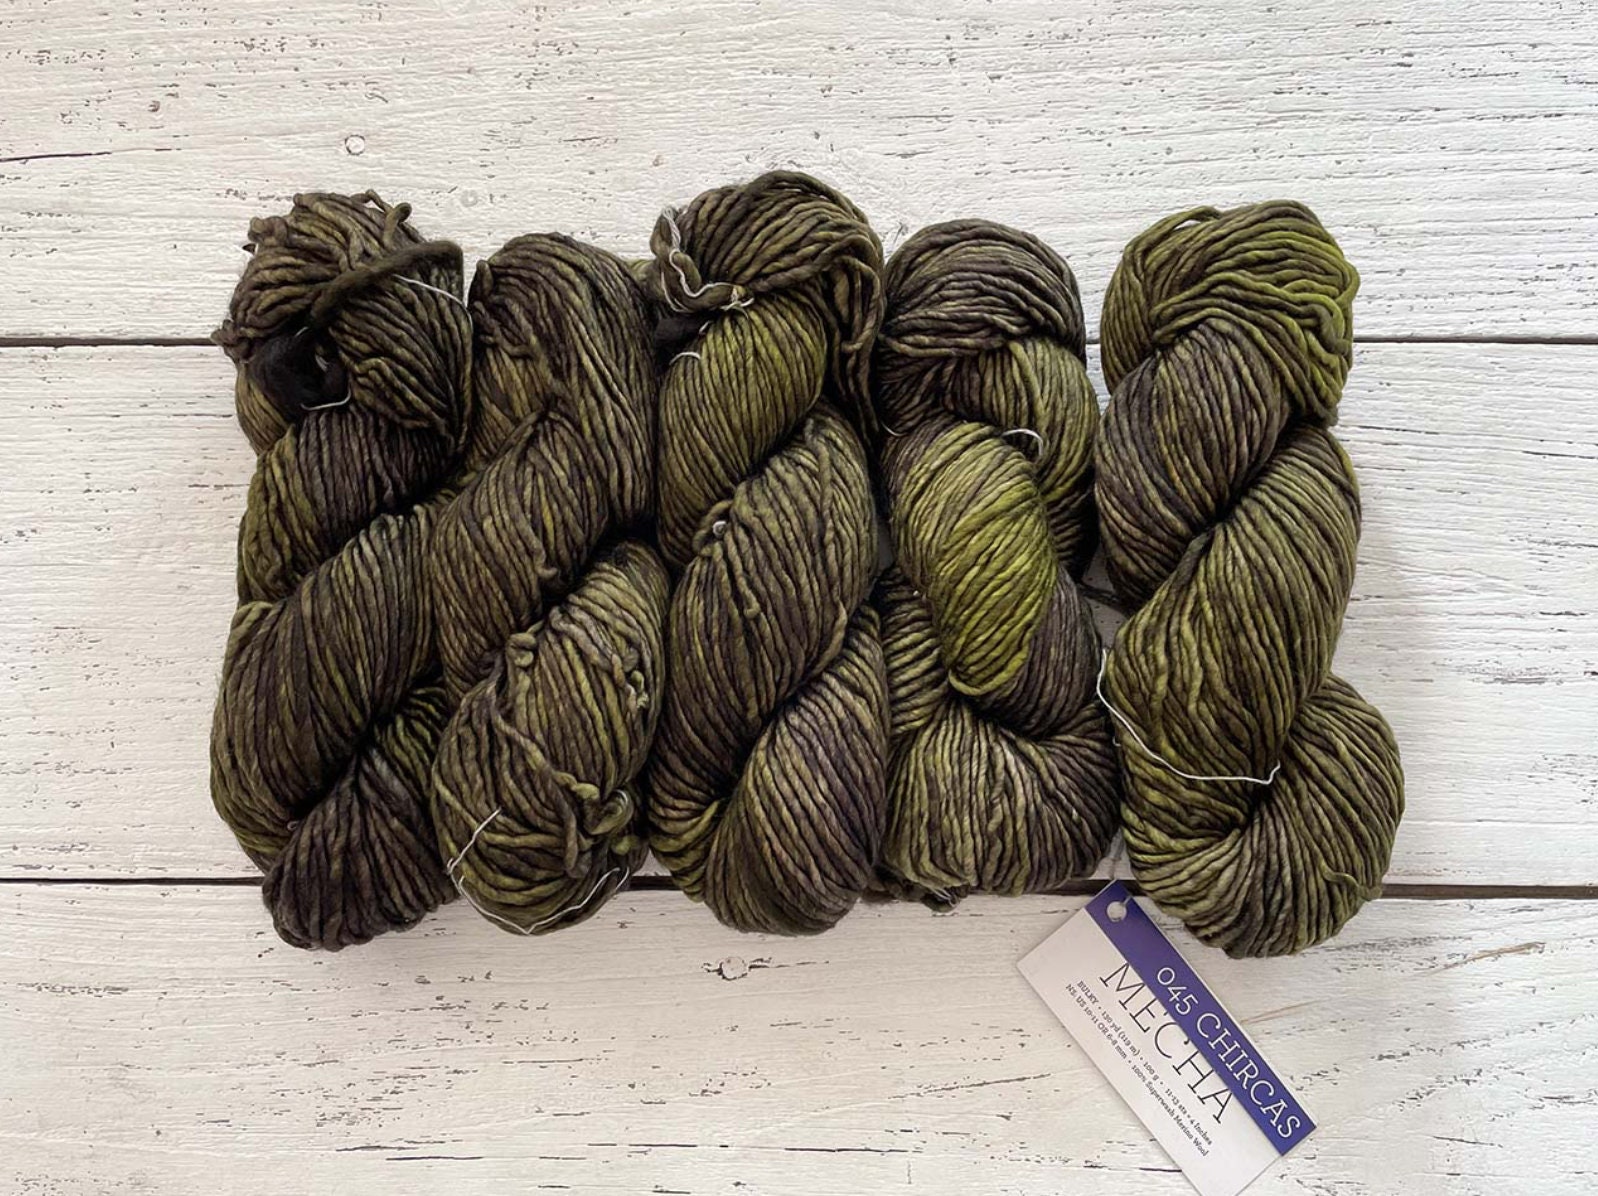 Malabrigo MECHA - CHIRCAS | Bulky Yarn, Single Ply, 100% Superwash Merino  Wool, Malabrigo Yarn, Gift for Knitters or Crocheters